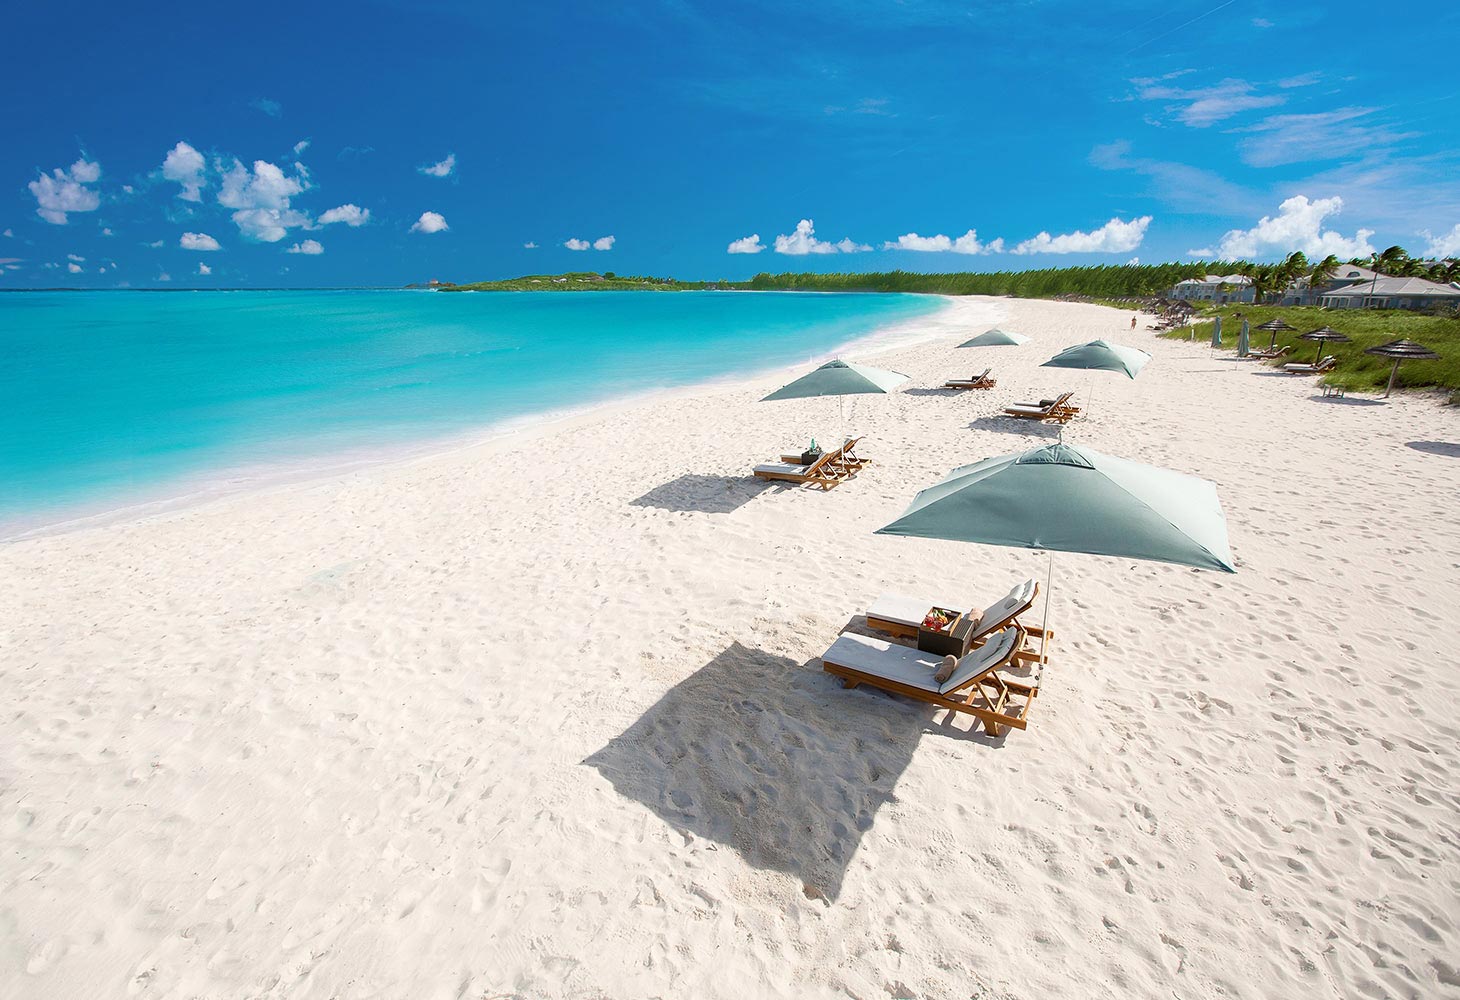 SANDALS EMERALD BAY Great Exuma Bahamas  Allinclusive Resort Reviews  Photos Rate Comparison  Tripadvisor